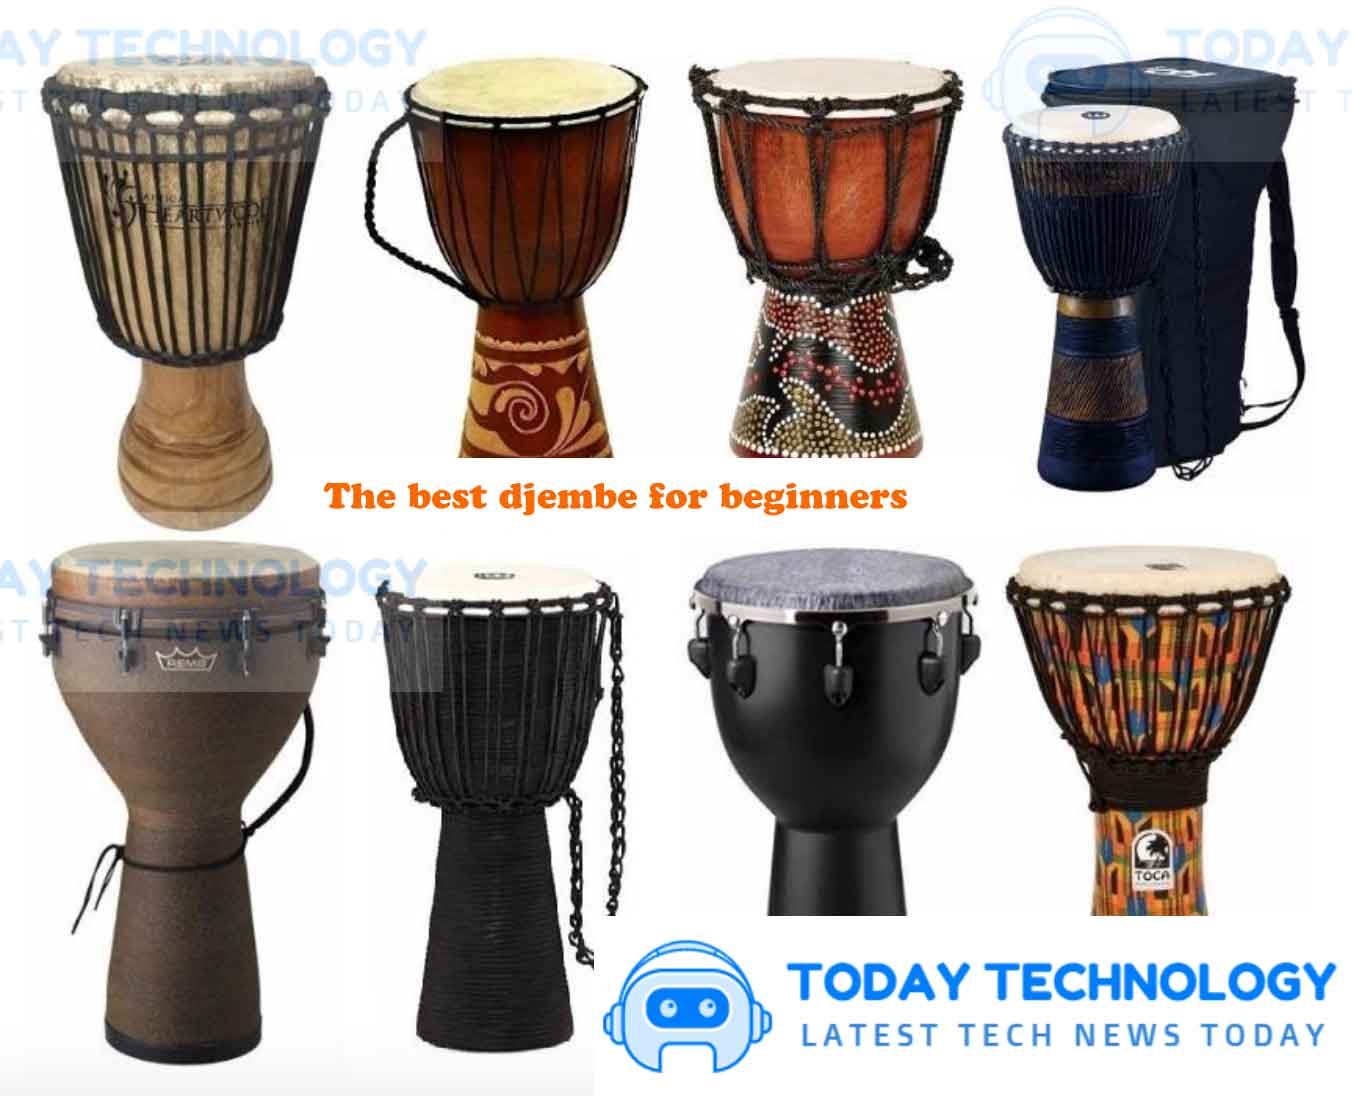 The best djembe for beginners